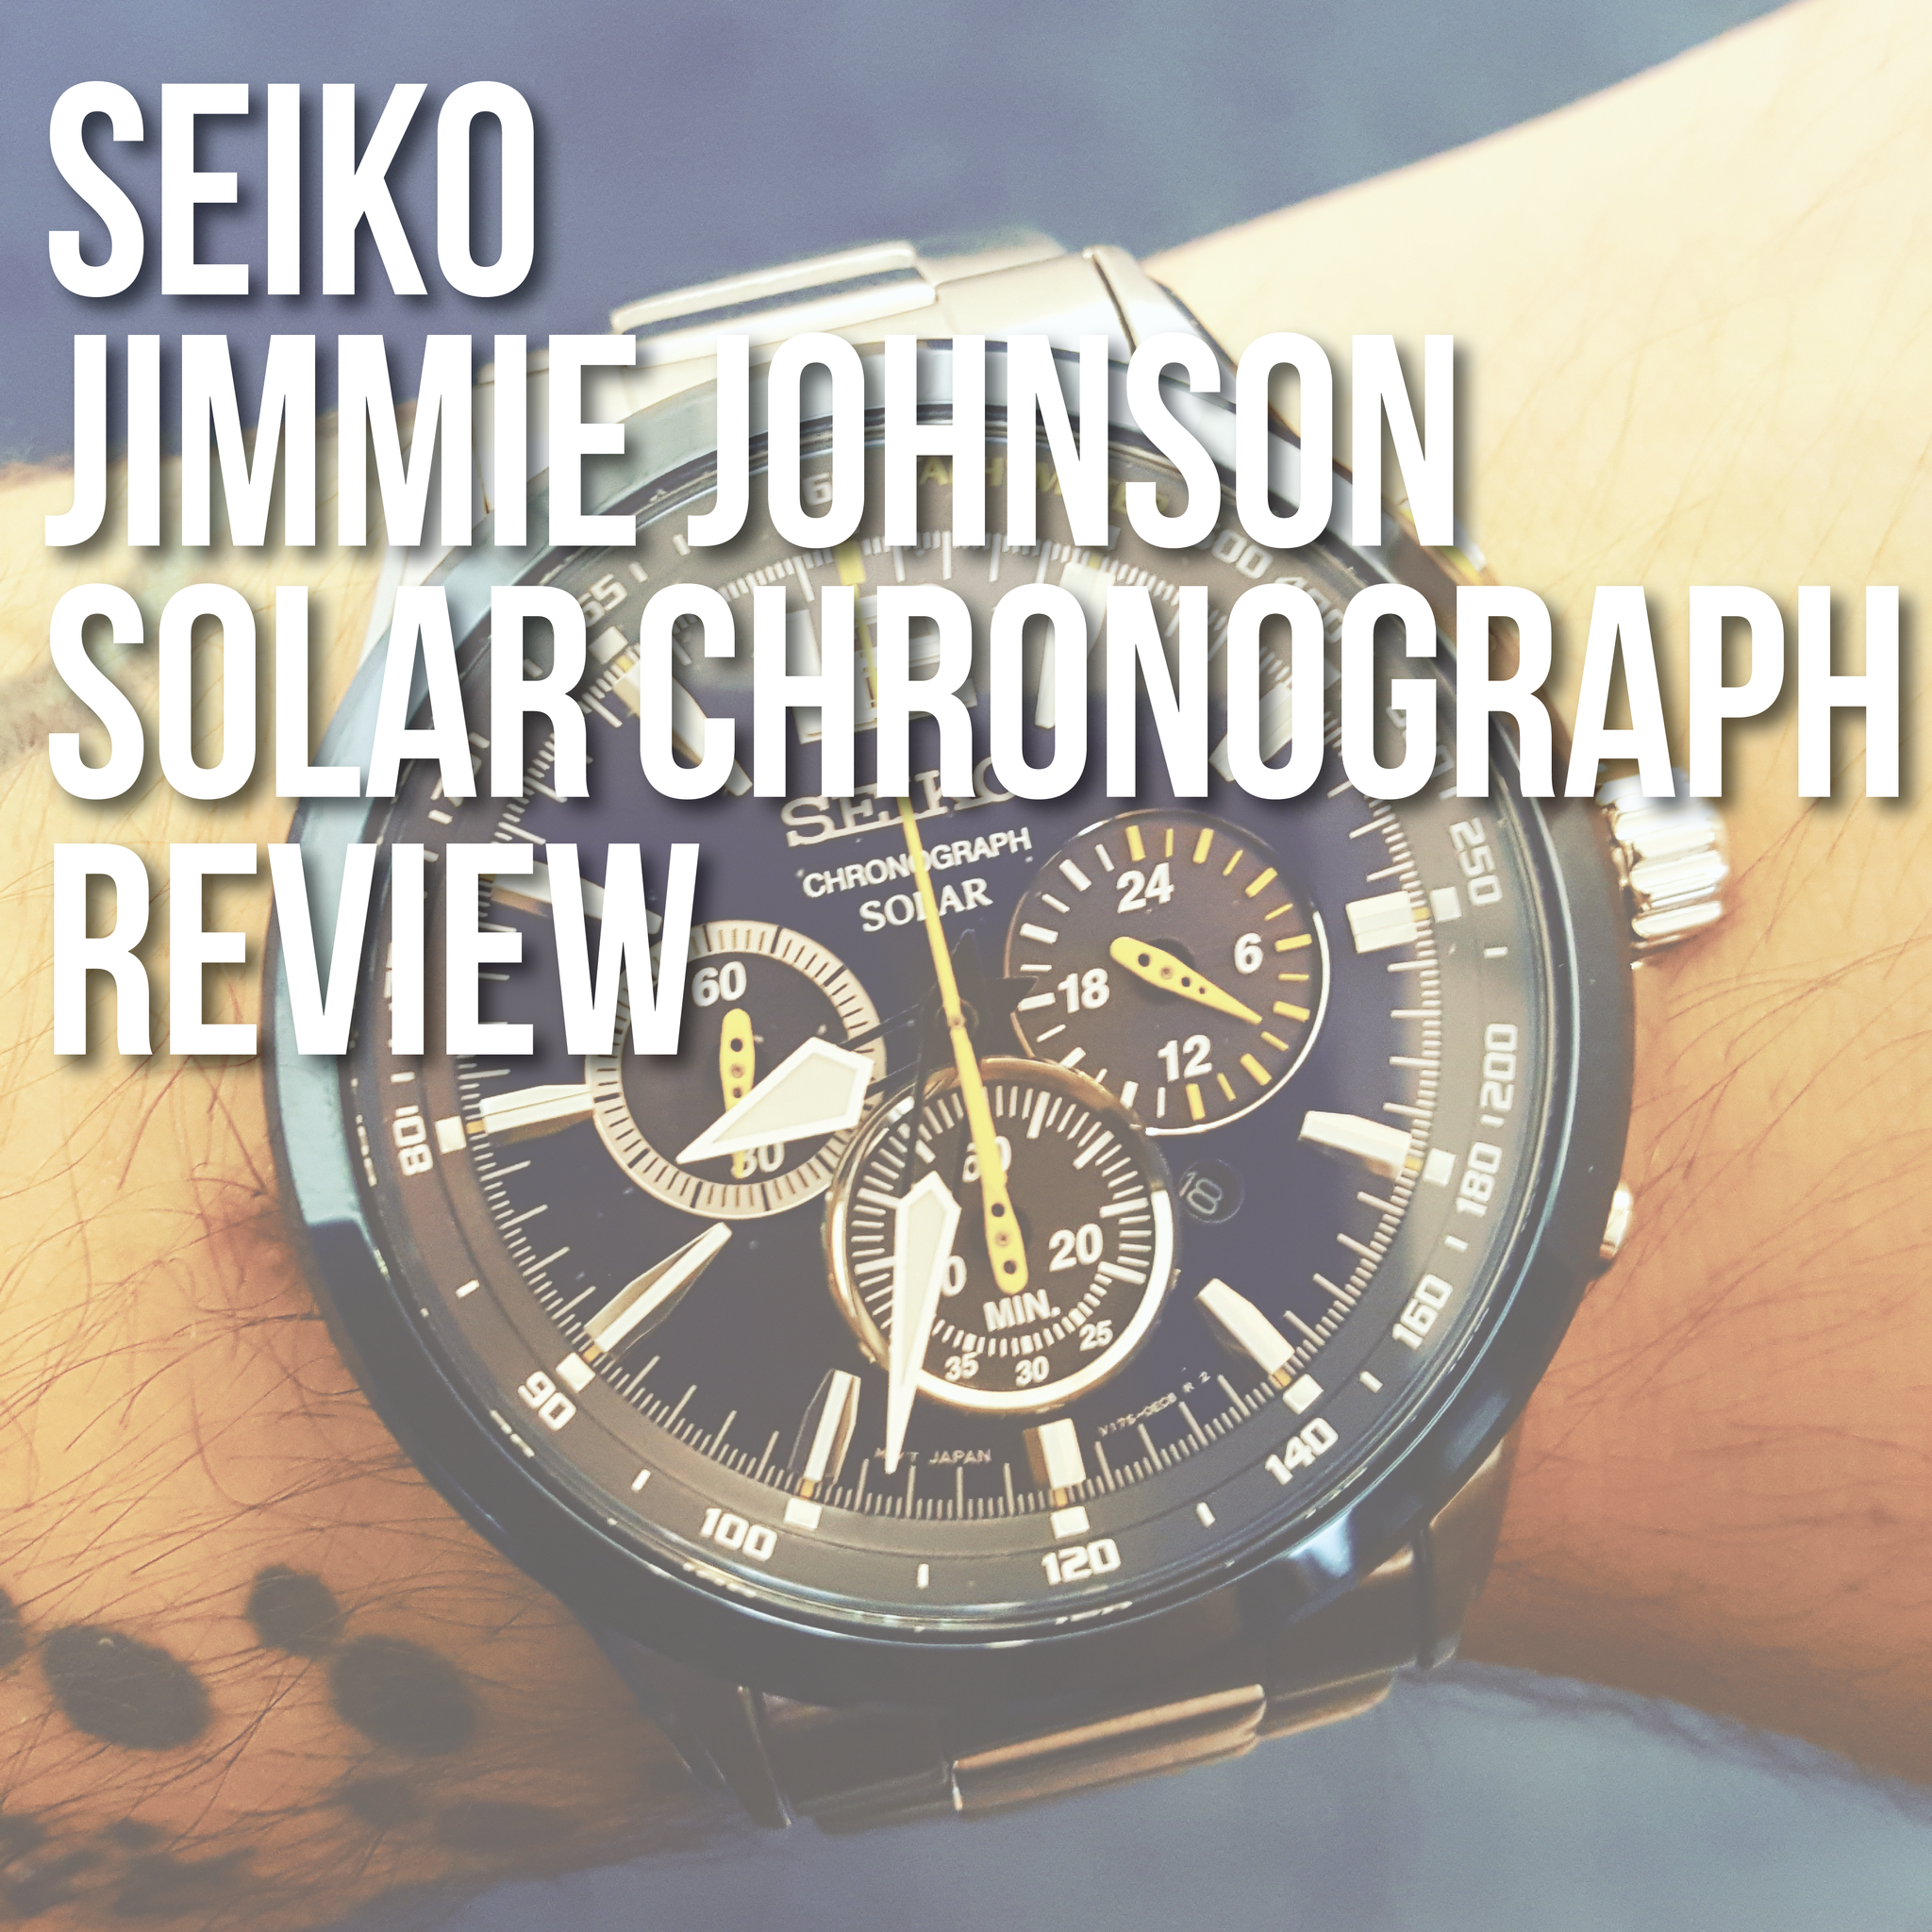 The Seiko Jimmie Johnson Solar Chronograph Review